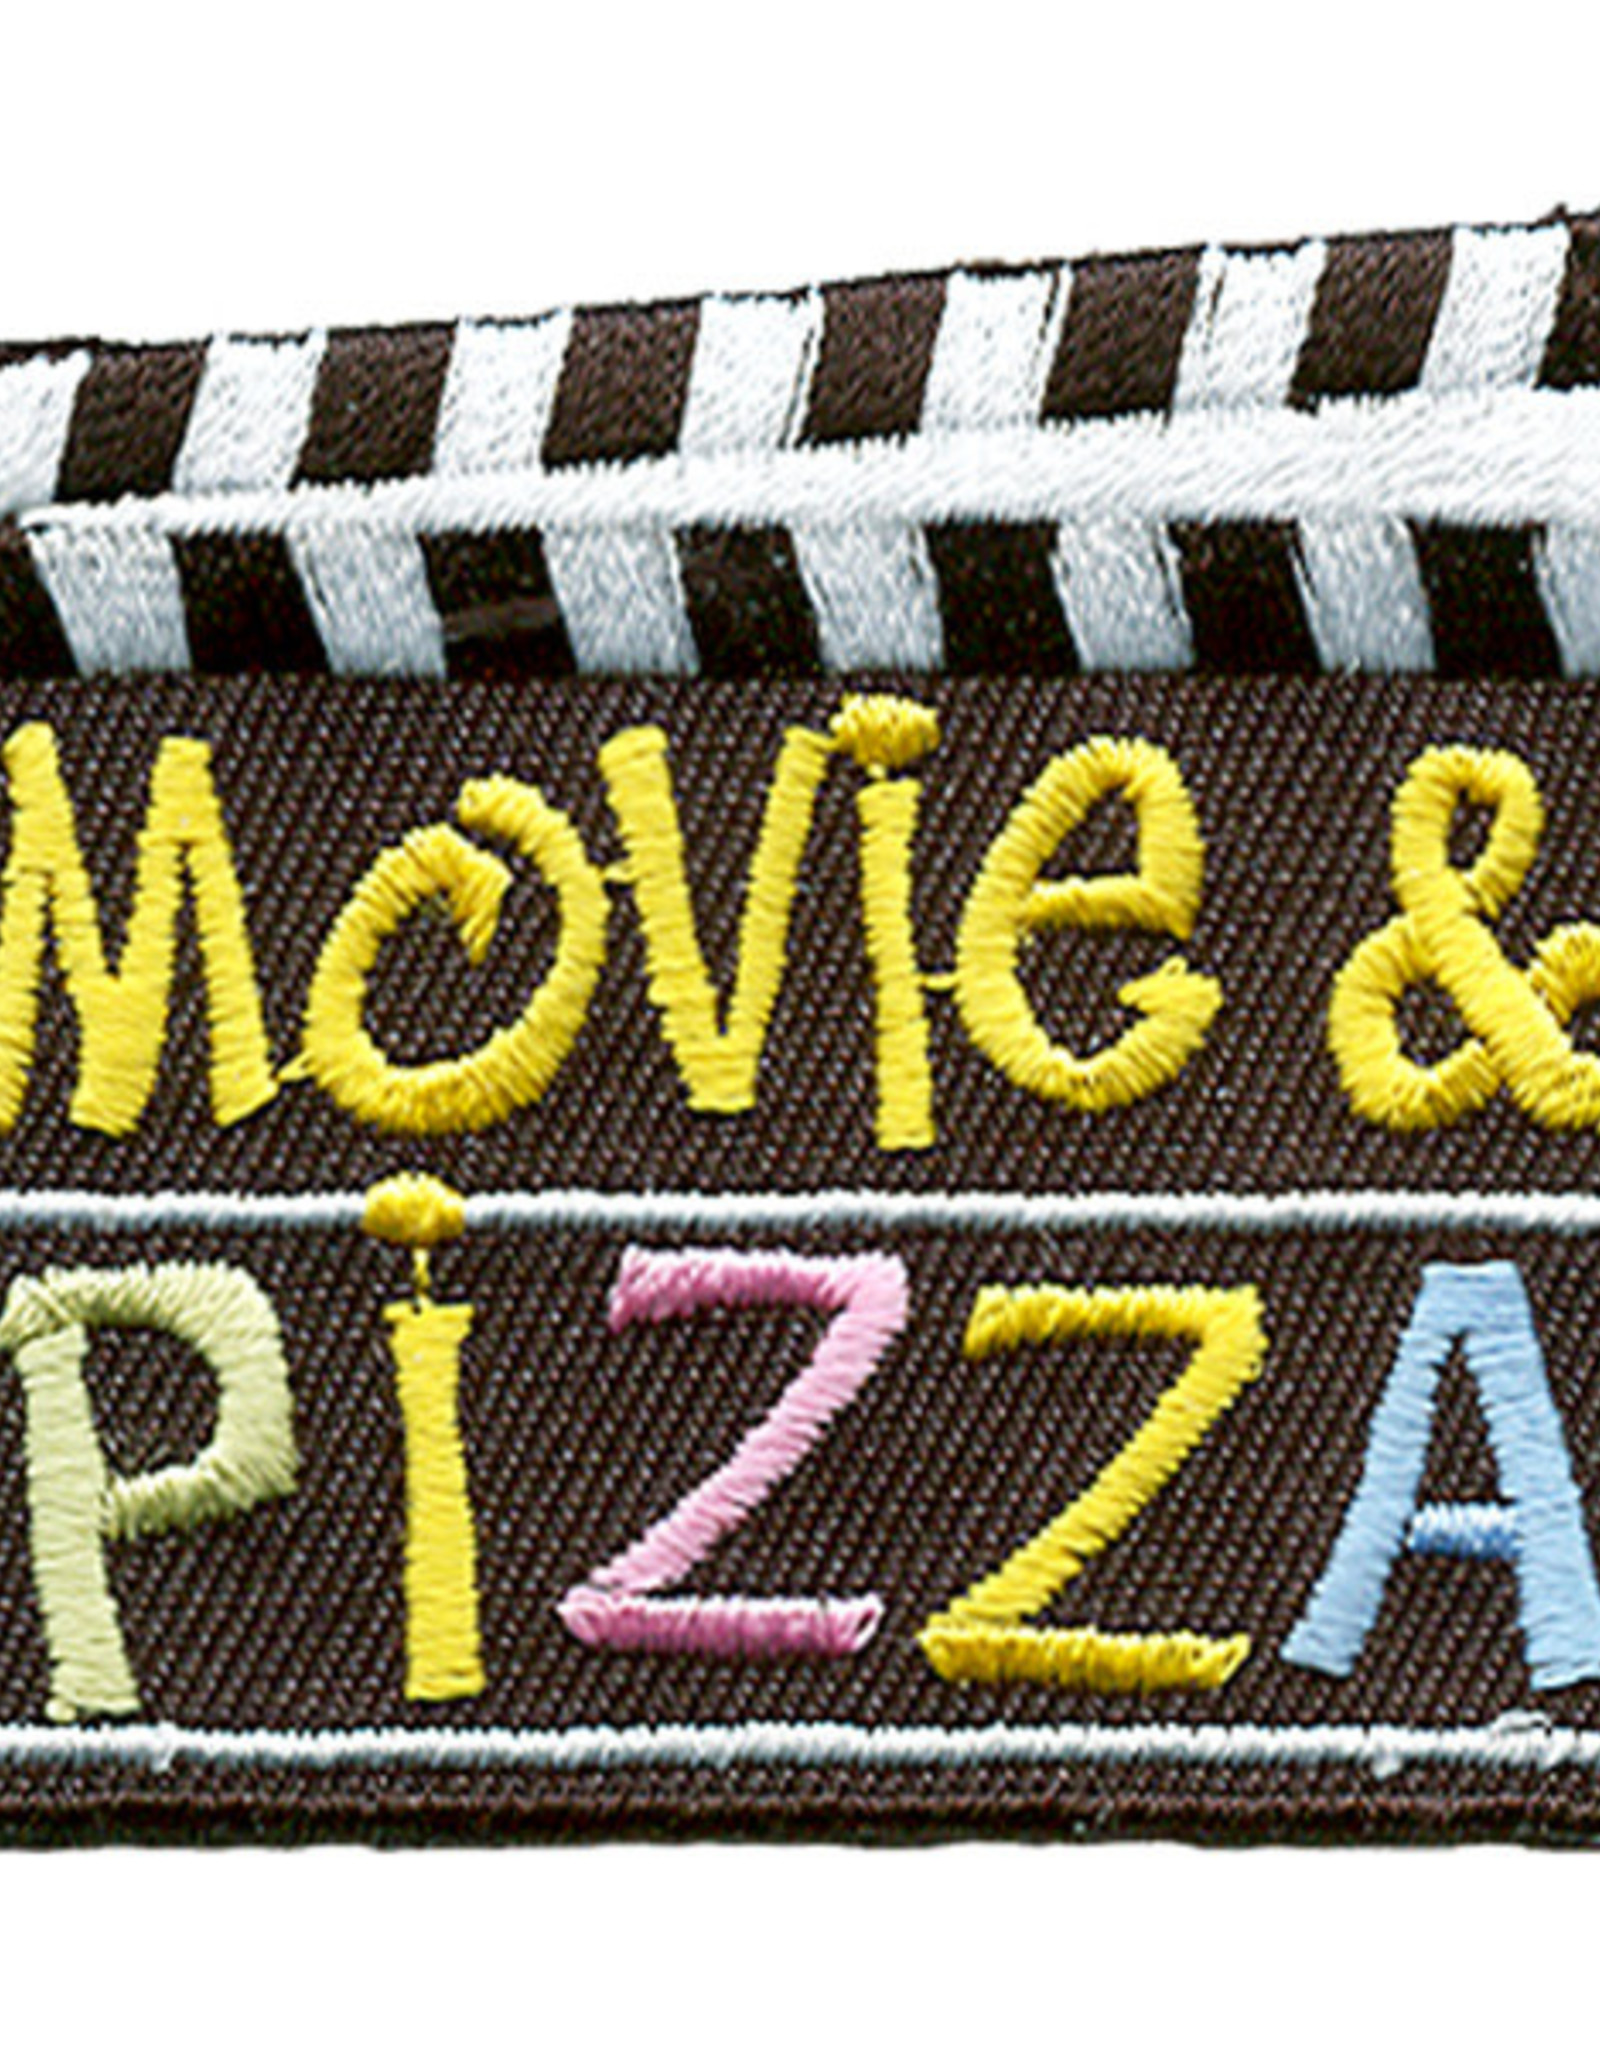 Advantage Emblem & Screen Prnt *Movie and Pizza Clapboard Fun Patch